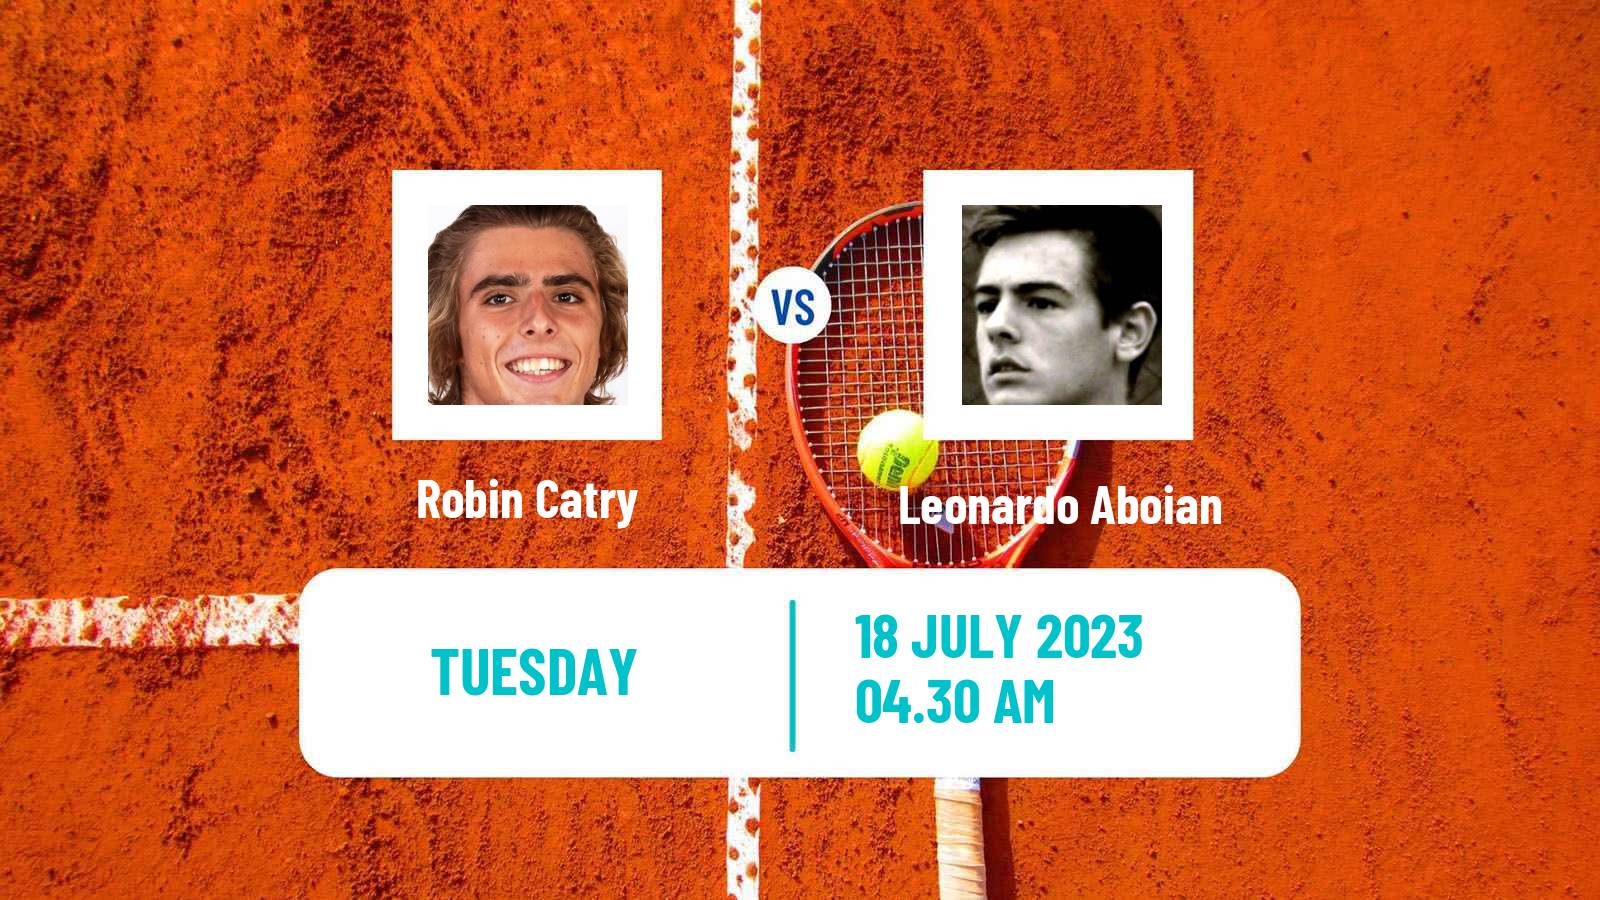 Tennis ITF M25 Esch Alzette 2 Men Robin Catry - Leonardo Aboian